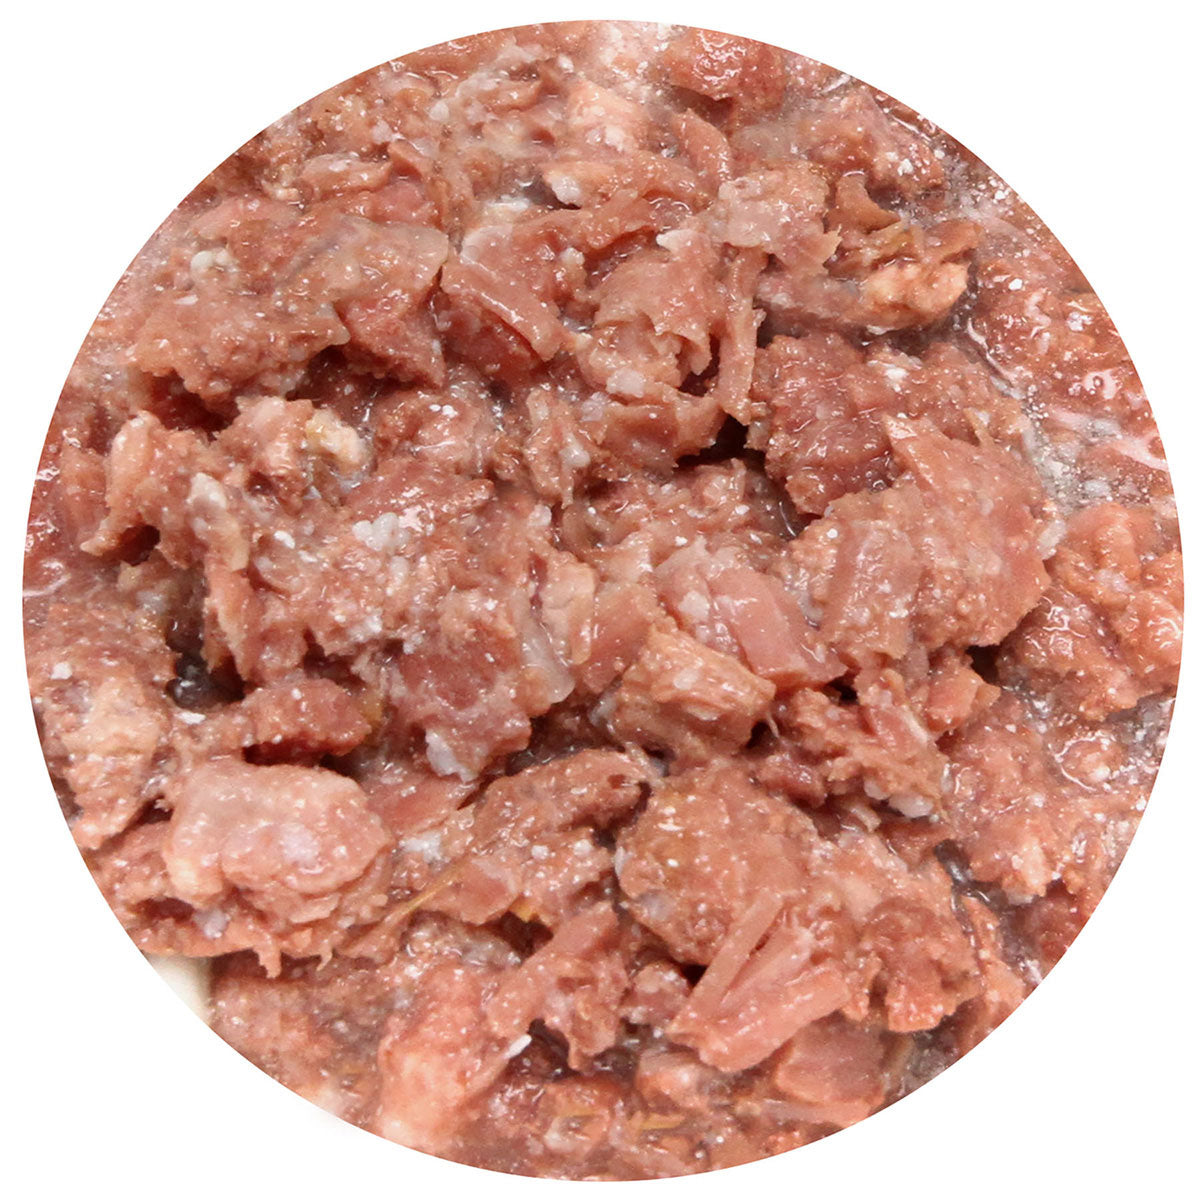 KON'S MARKET（コンズマーケット） オーガニック羊肉（レトルト）犬用おやつ 無添加 トッピング